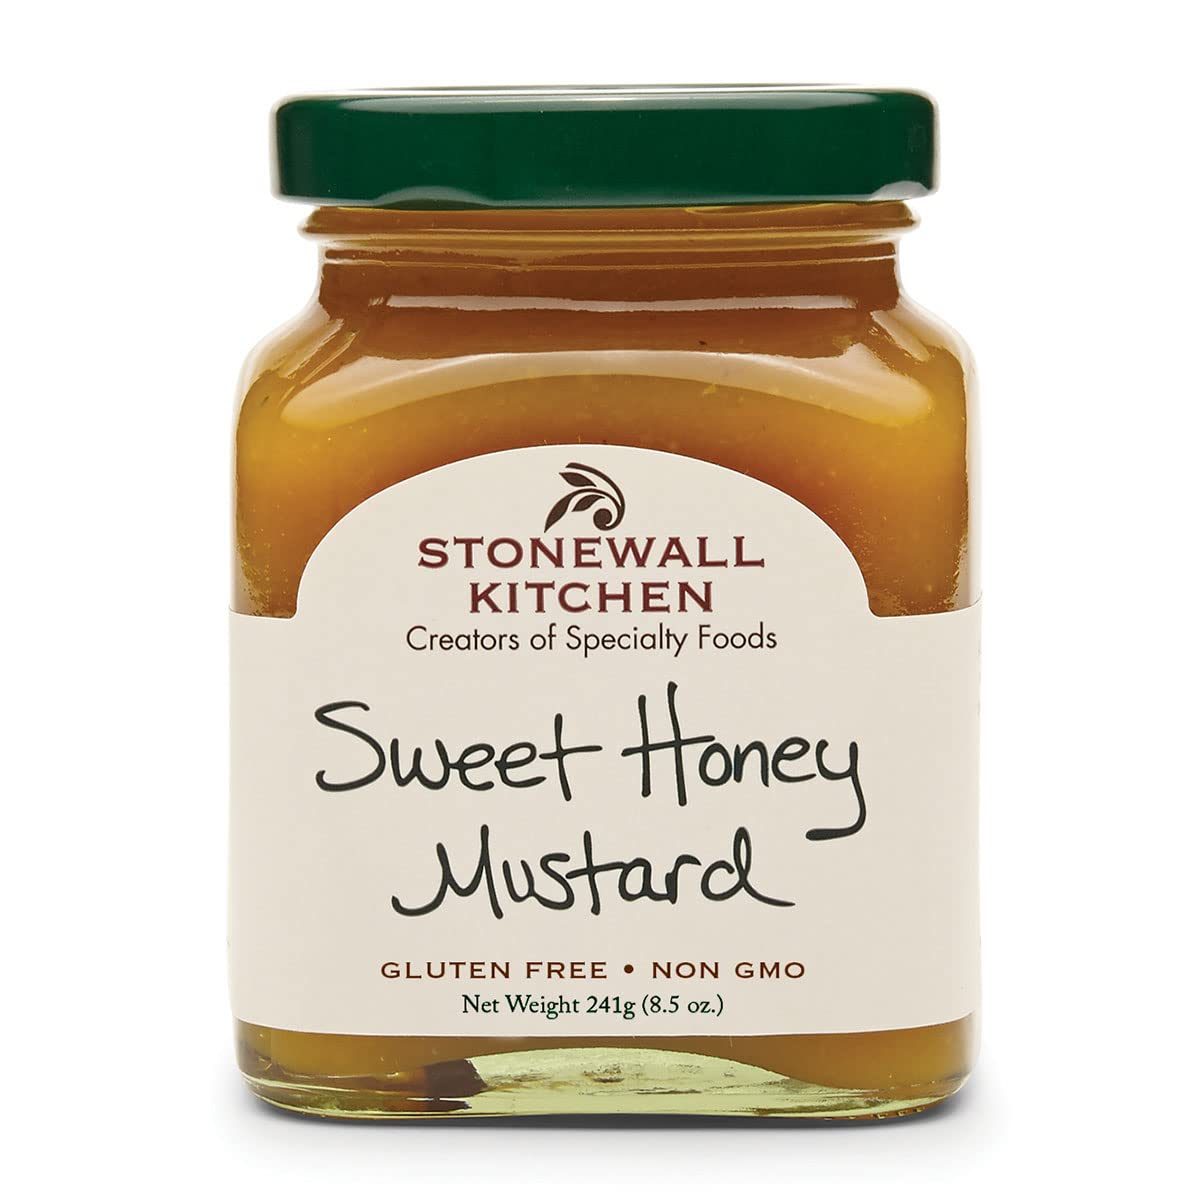 Stonewall Kitchen Sweet Honey Mustard, 241g